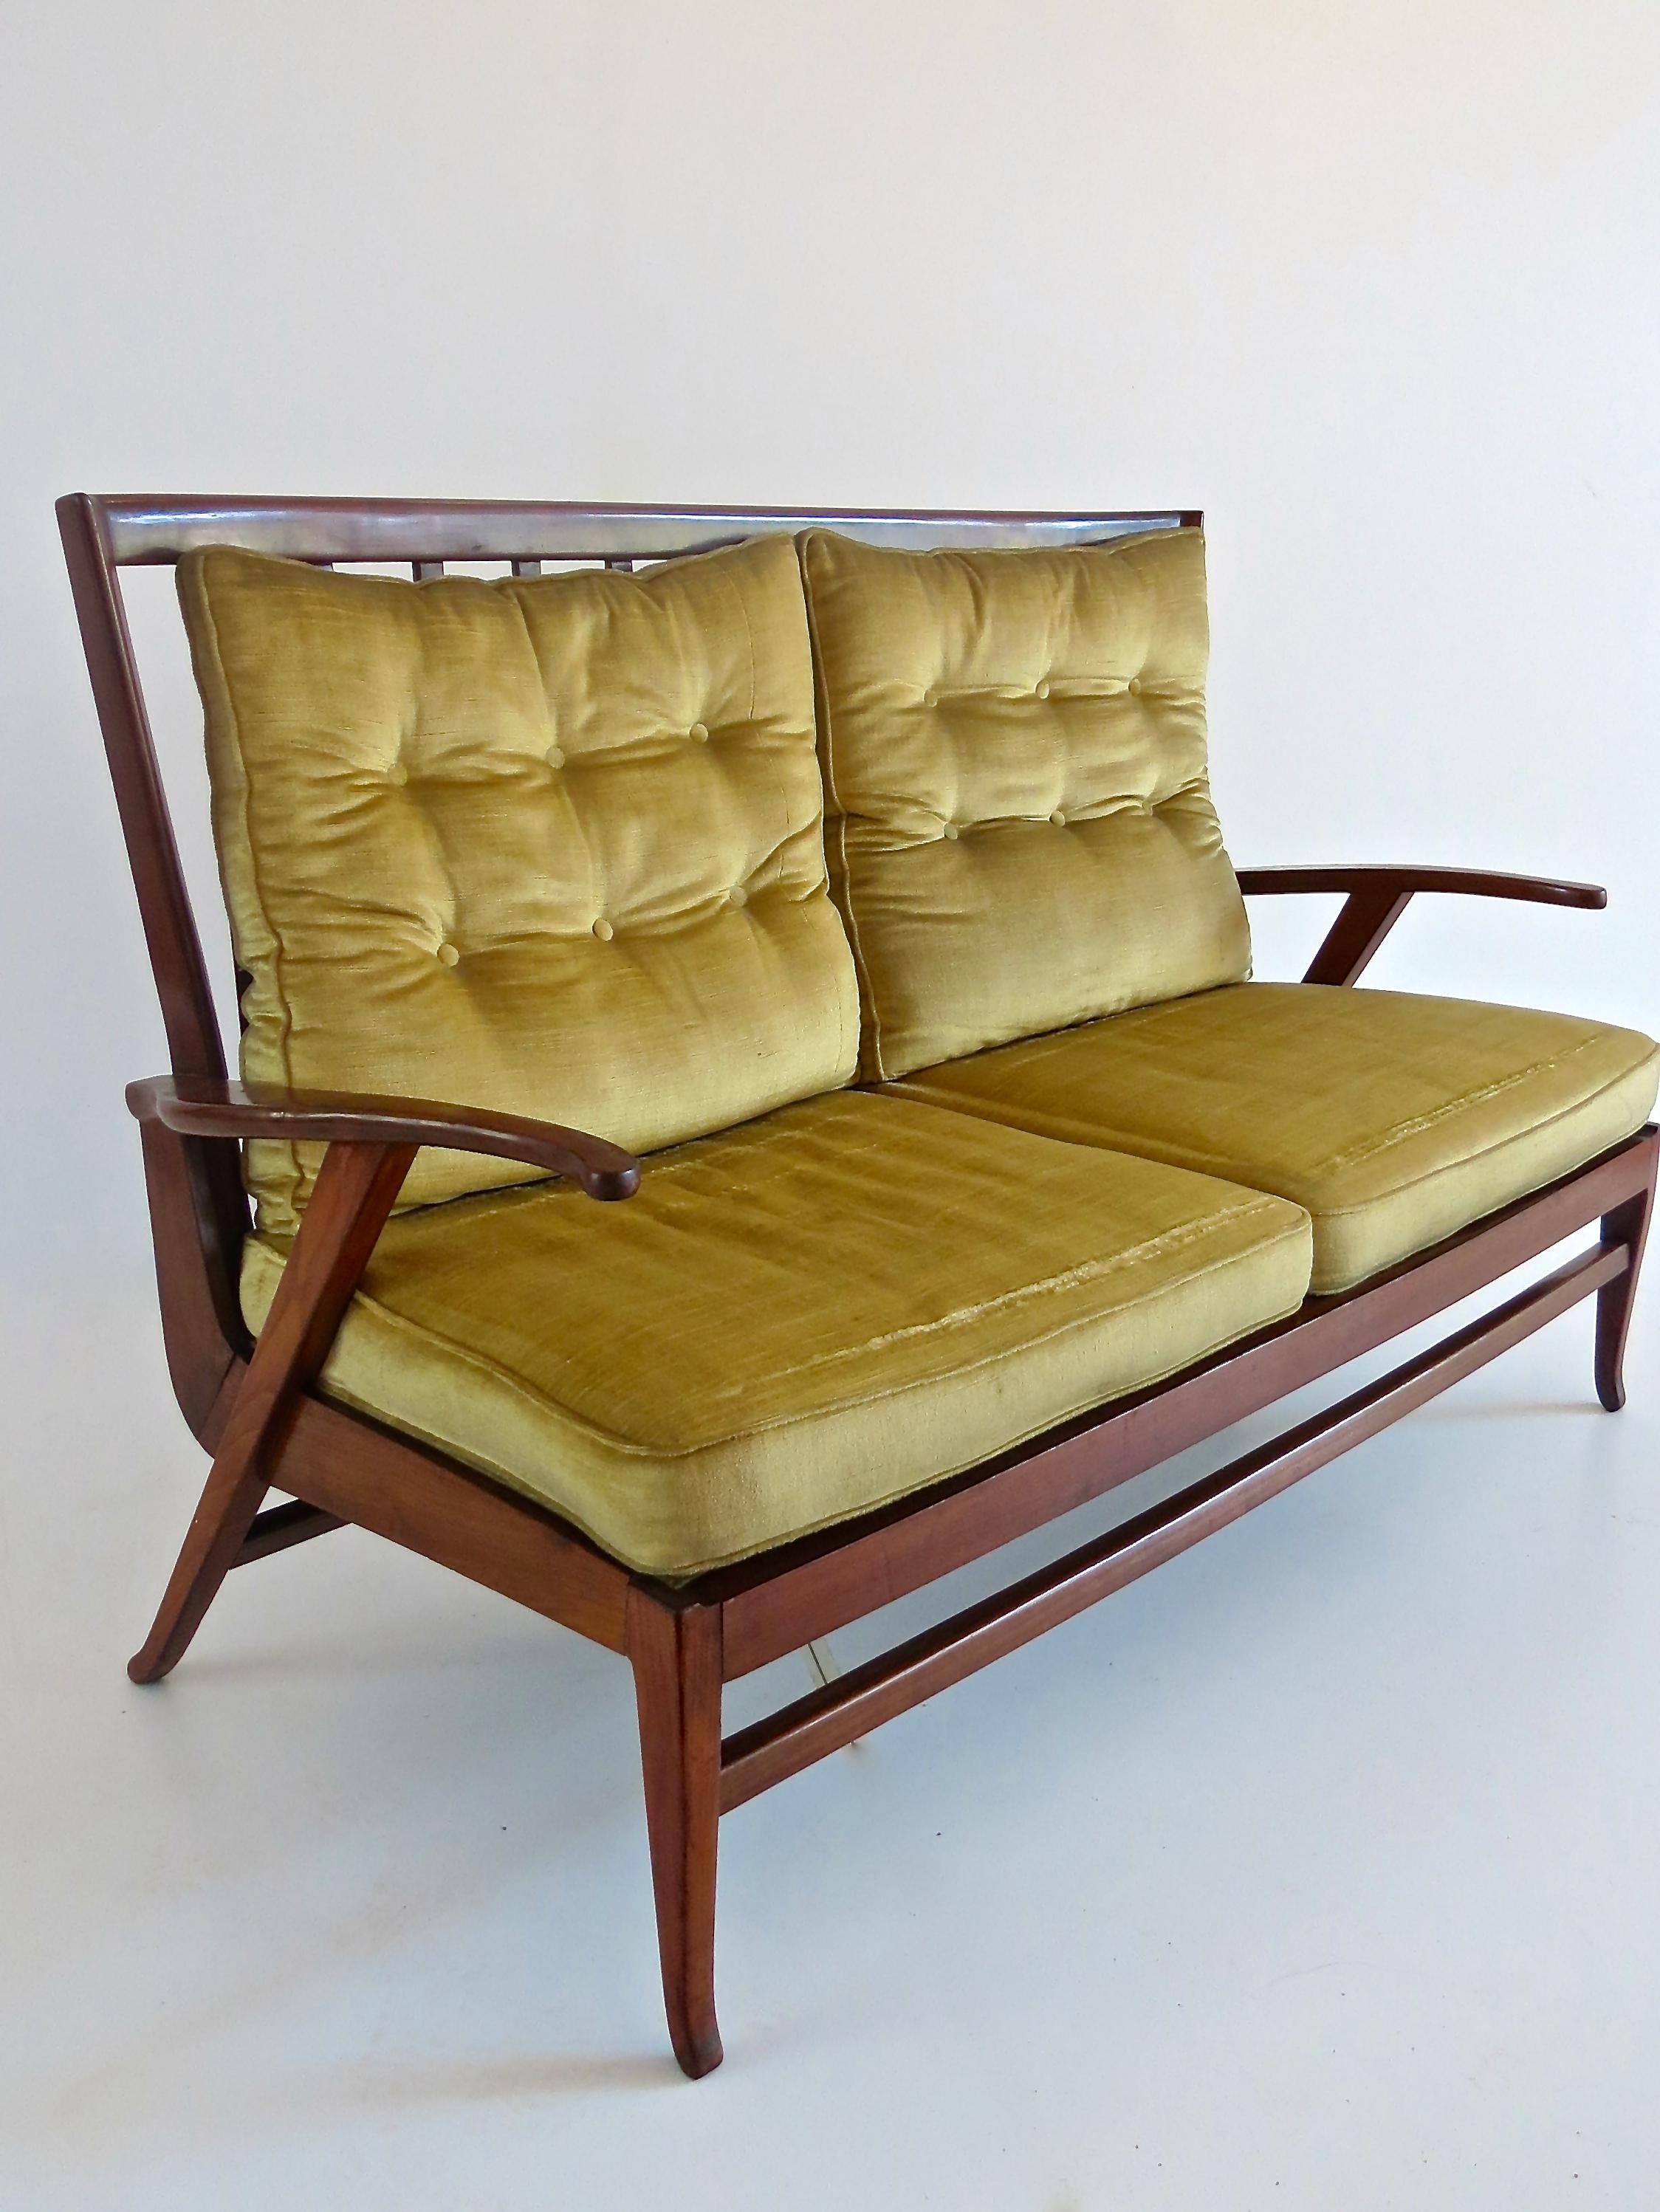 Rare curved sofa attributed to Paolo Buffa, circa 1950
walnut, original gold velvet, iron
very good original condition
Measures: 145.5 x 60 cm height 94 cm height seat. 41 cm.